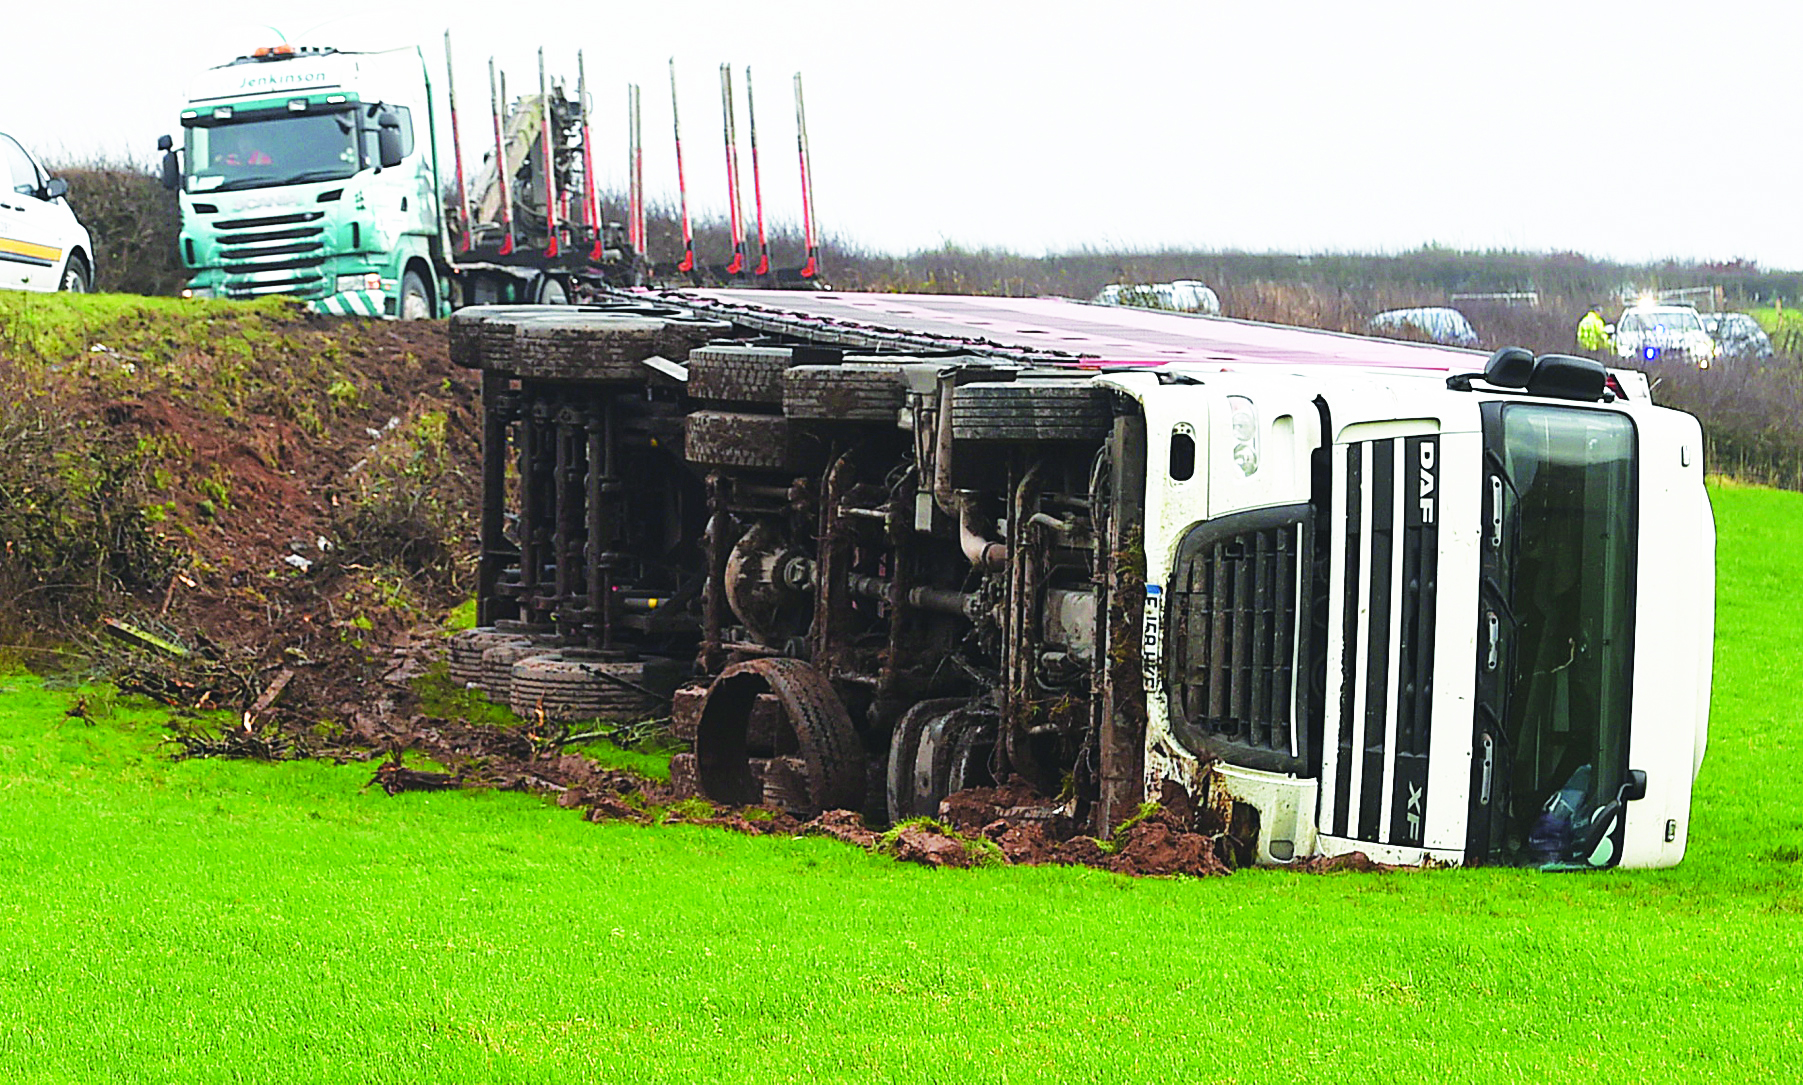 A75 delays after lorry crash